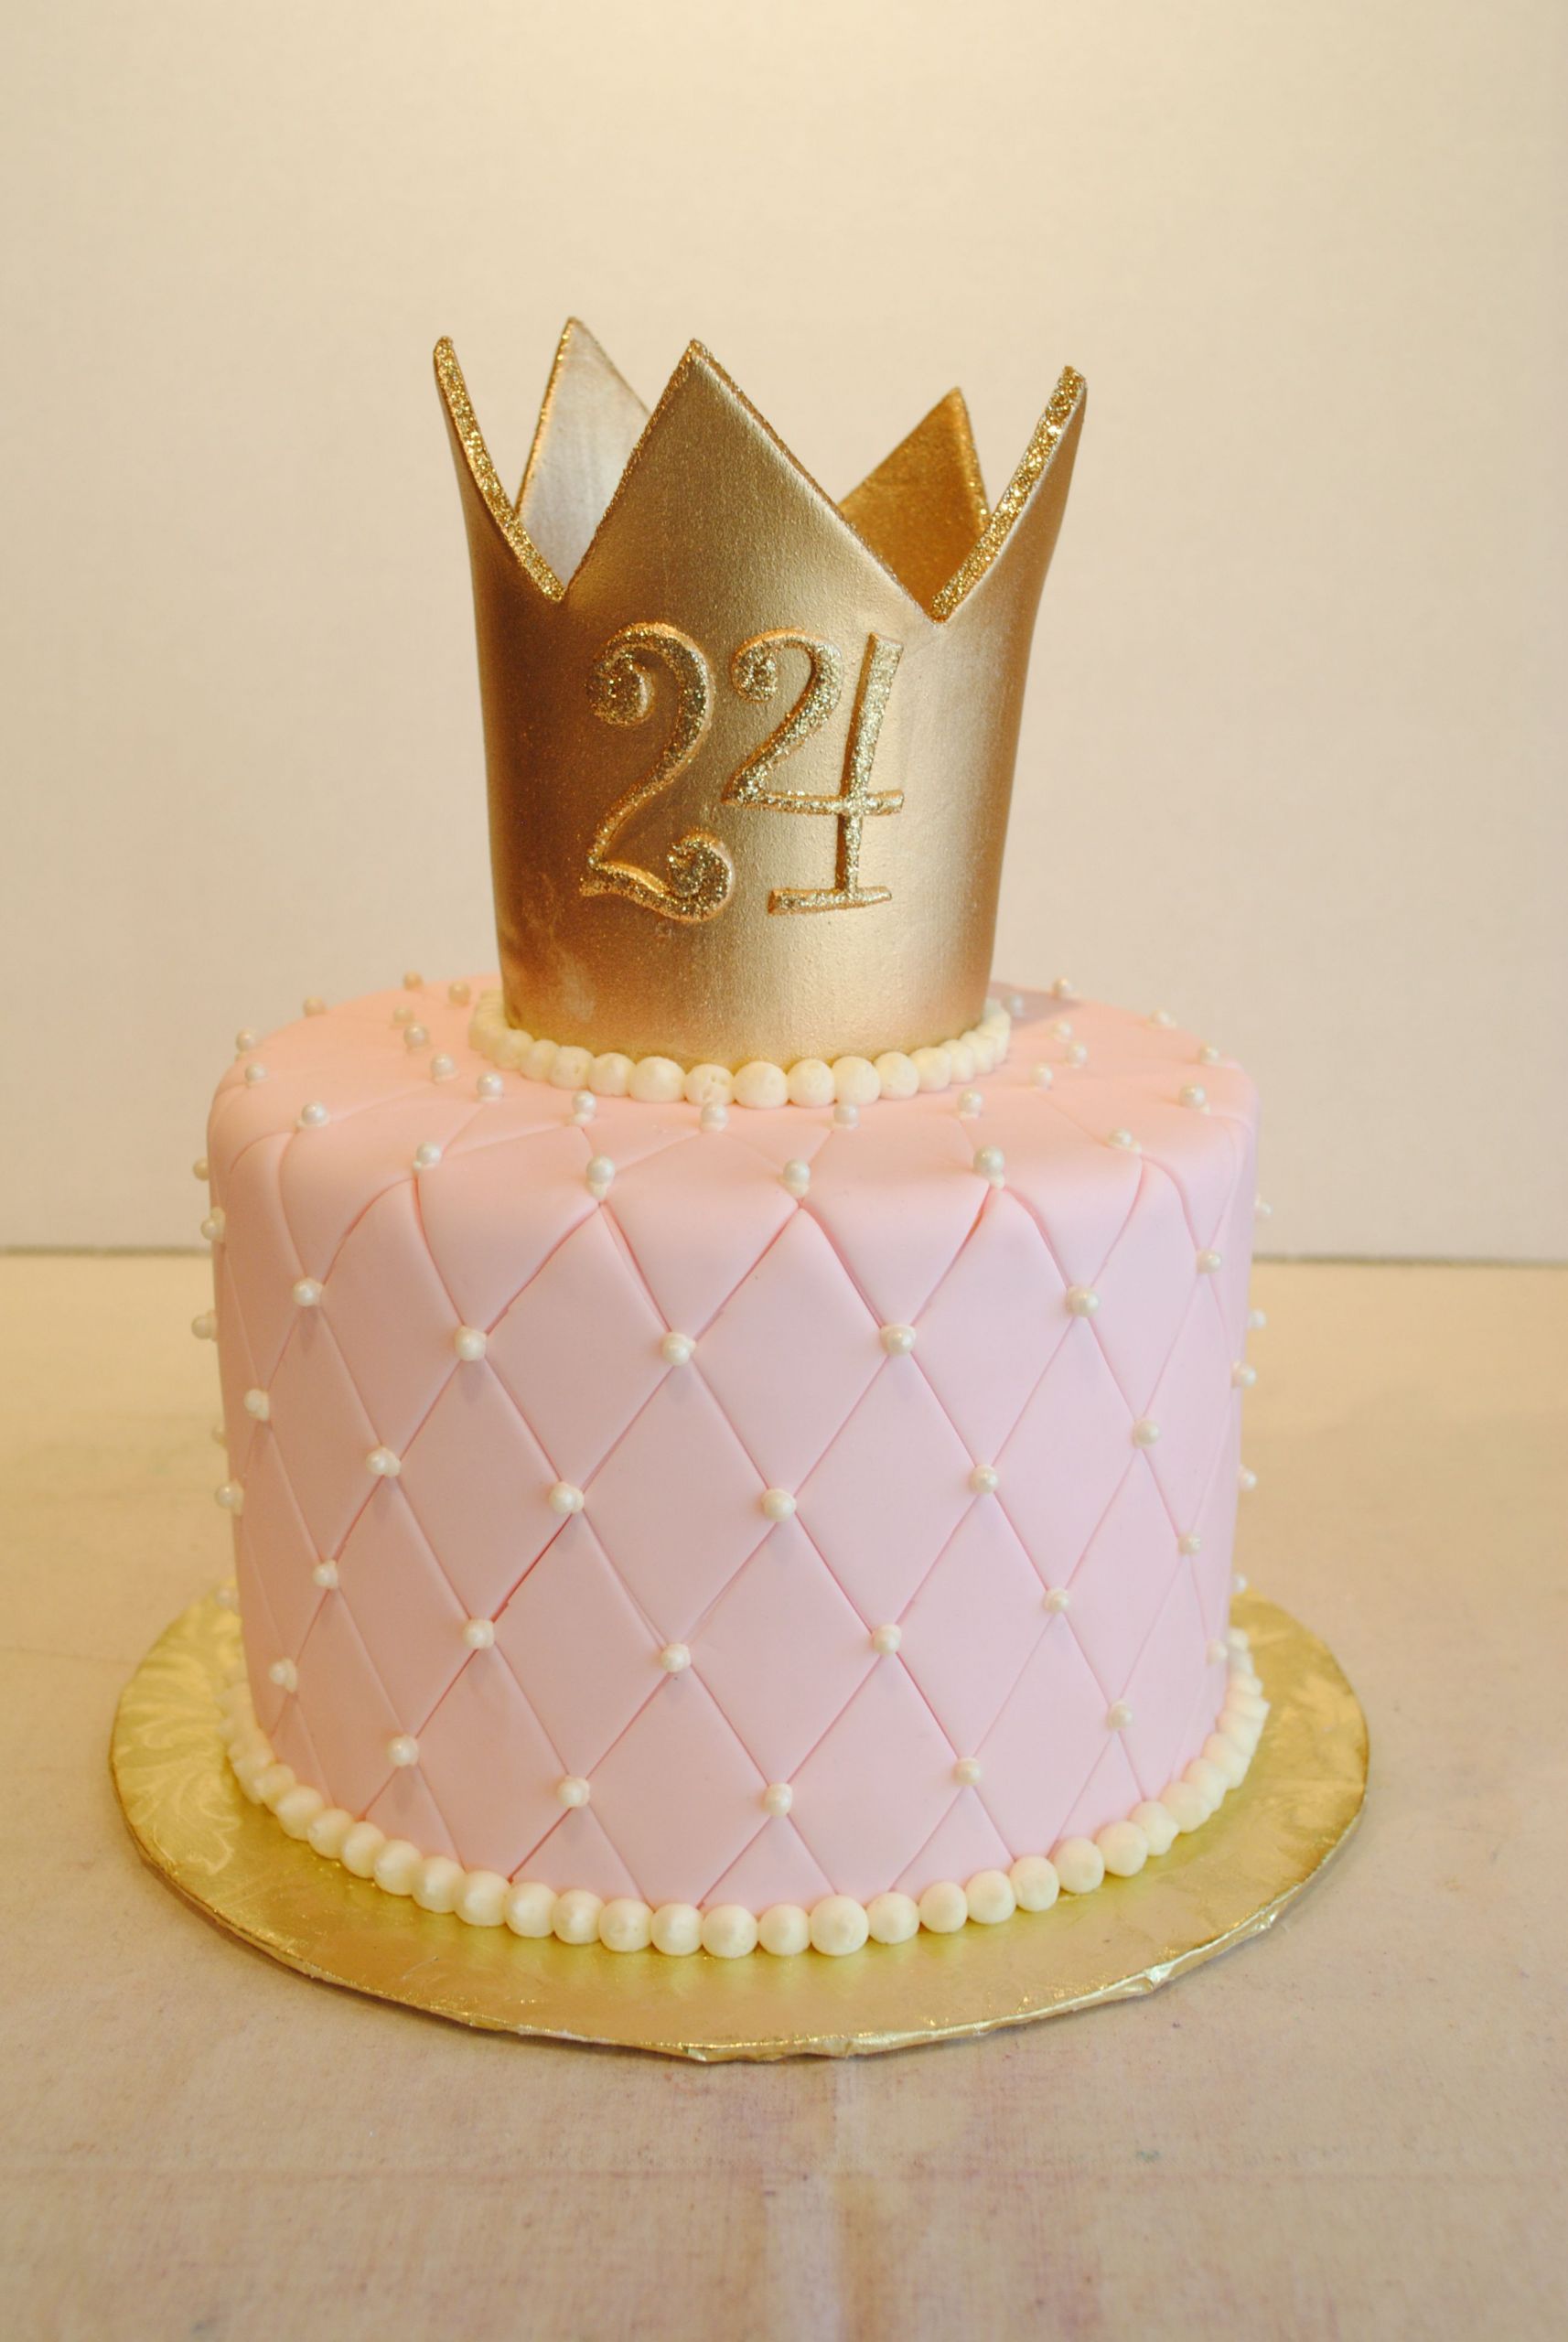 Crown Birthday Cake
 Best 25 Cake with crown ideas on Pinterest